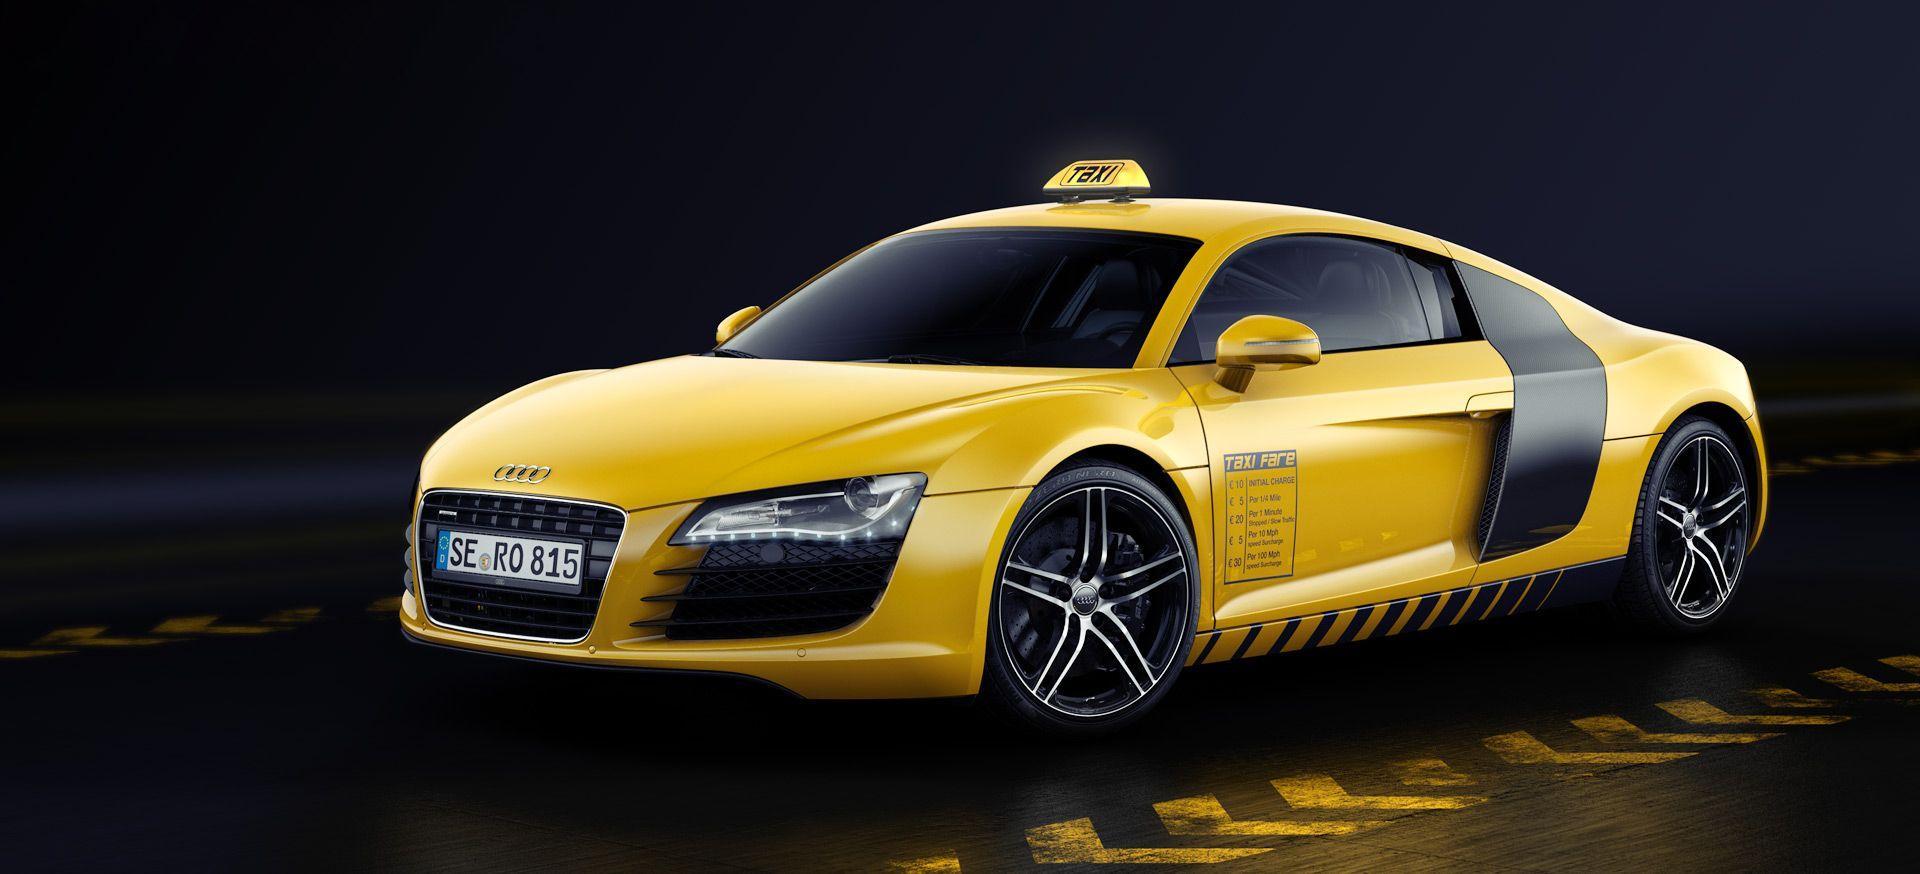 Audi Yellow Cab wallpaper